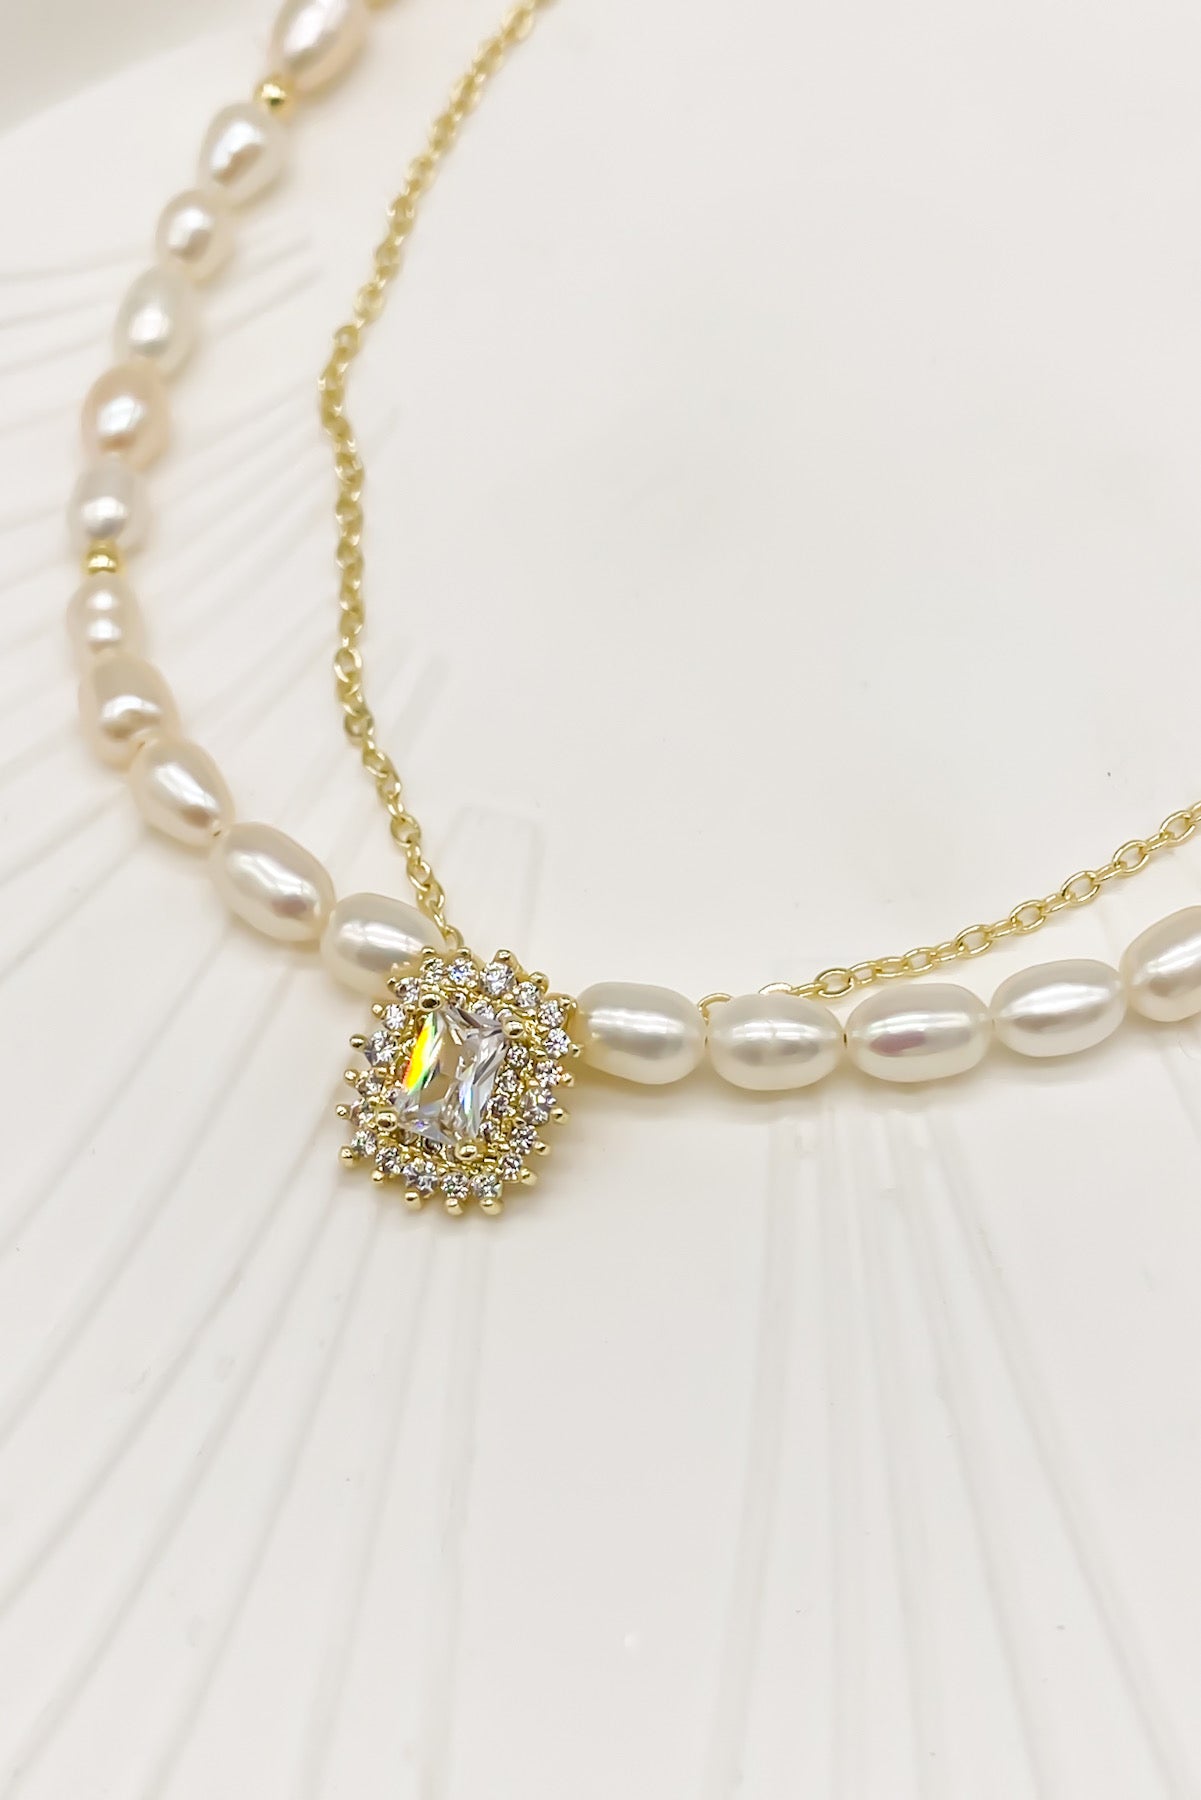 SKYE Shop Chic Modern Elegant Classy Women Jewelry French Parisian Minimalist Jolie Freshwater Pearl Crystal Pendant Necklace 4